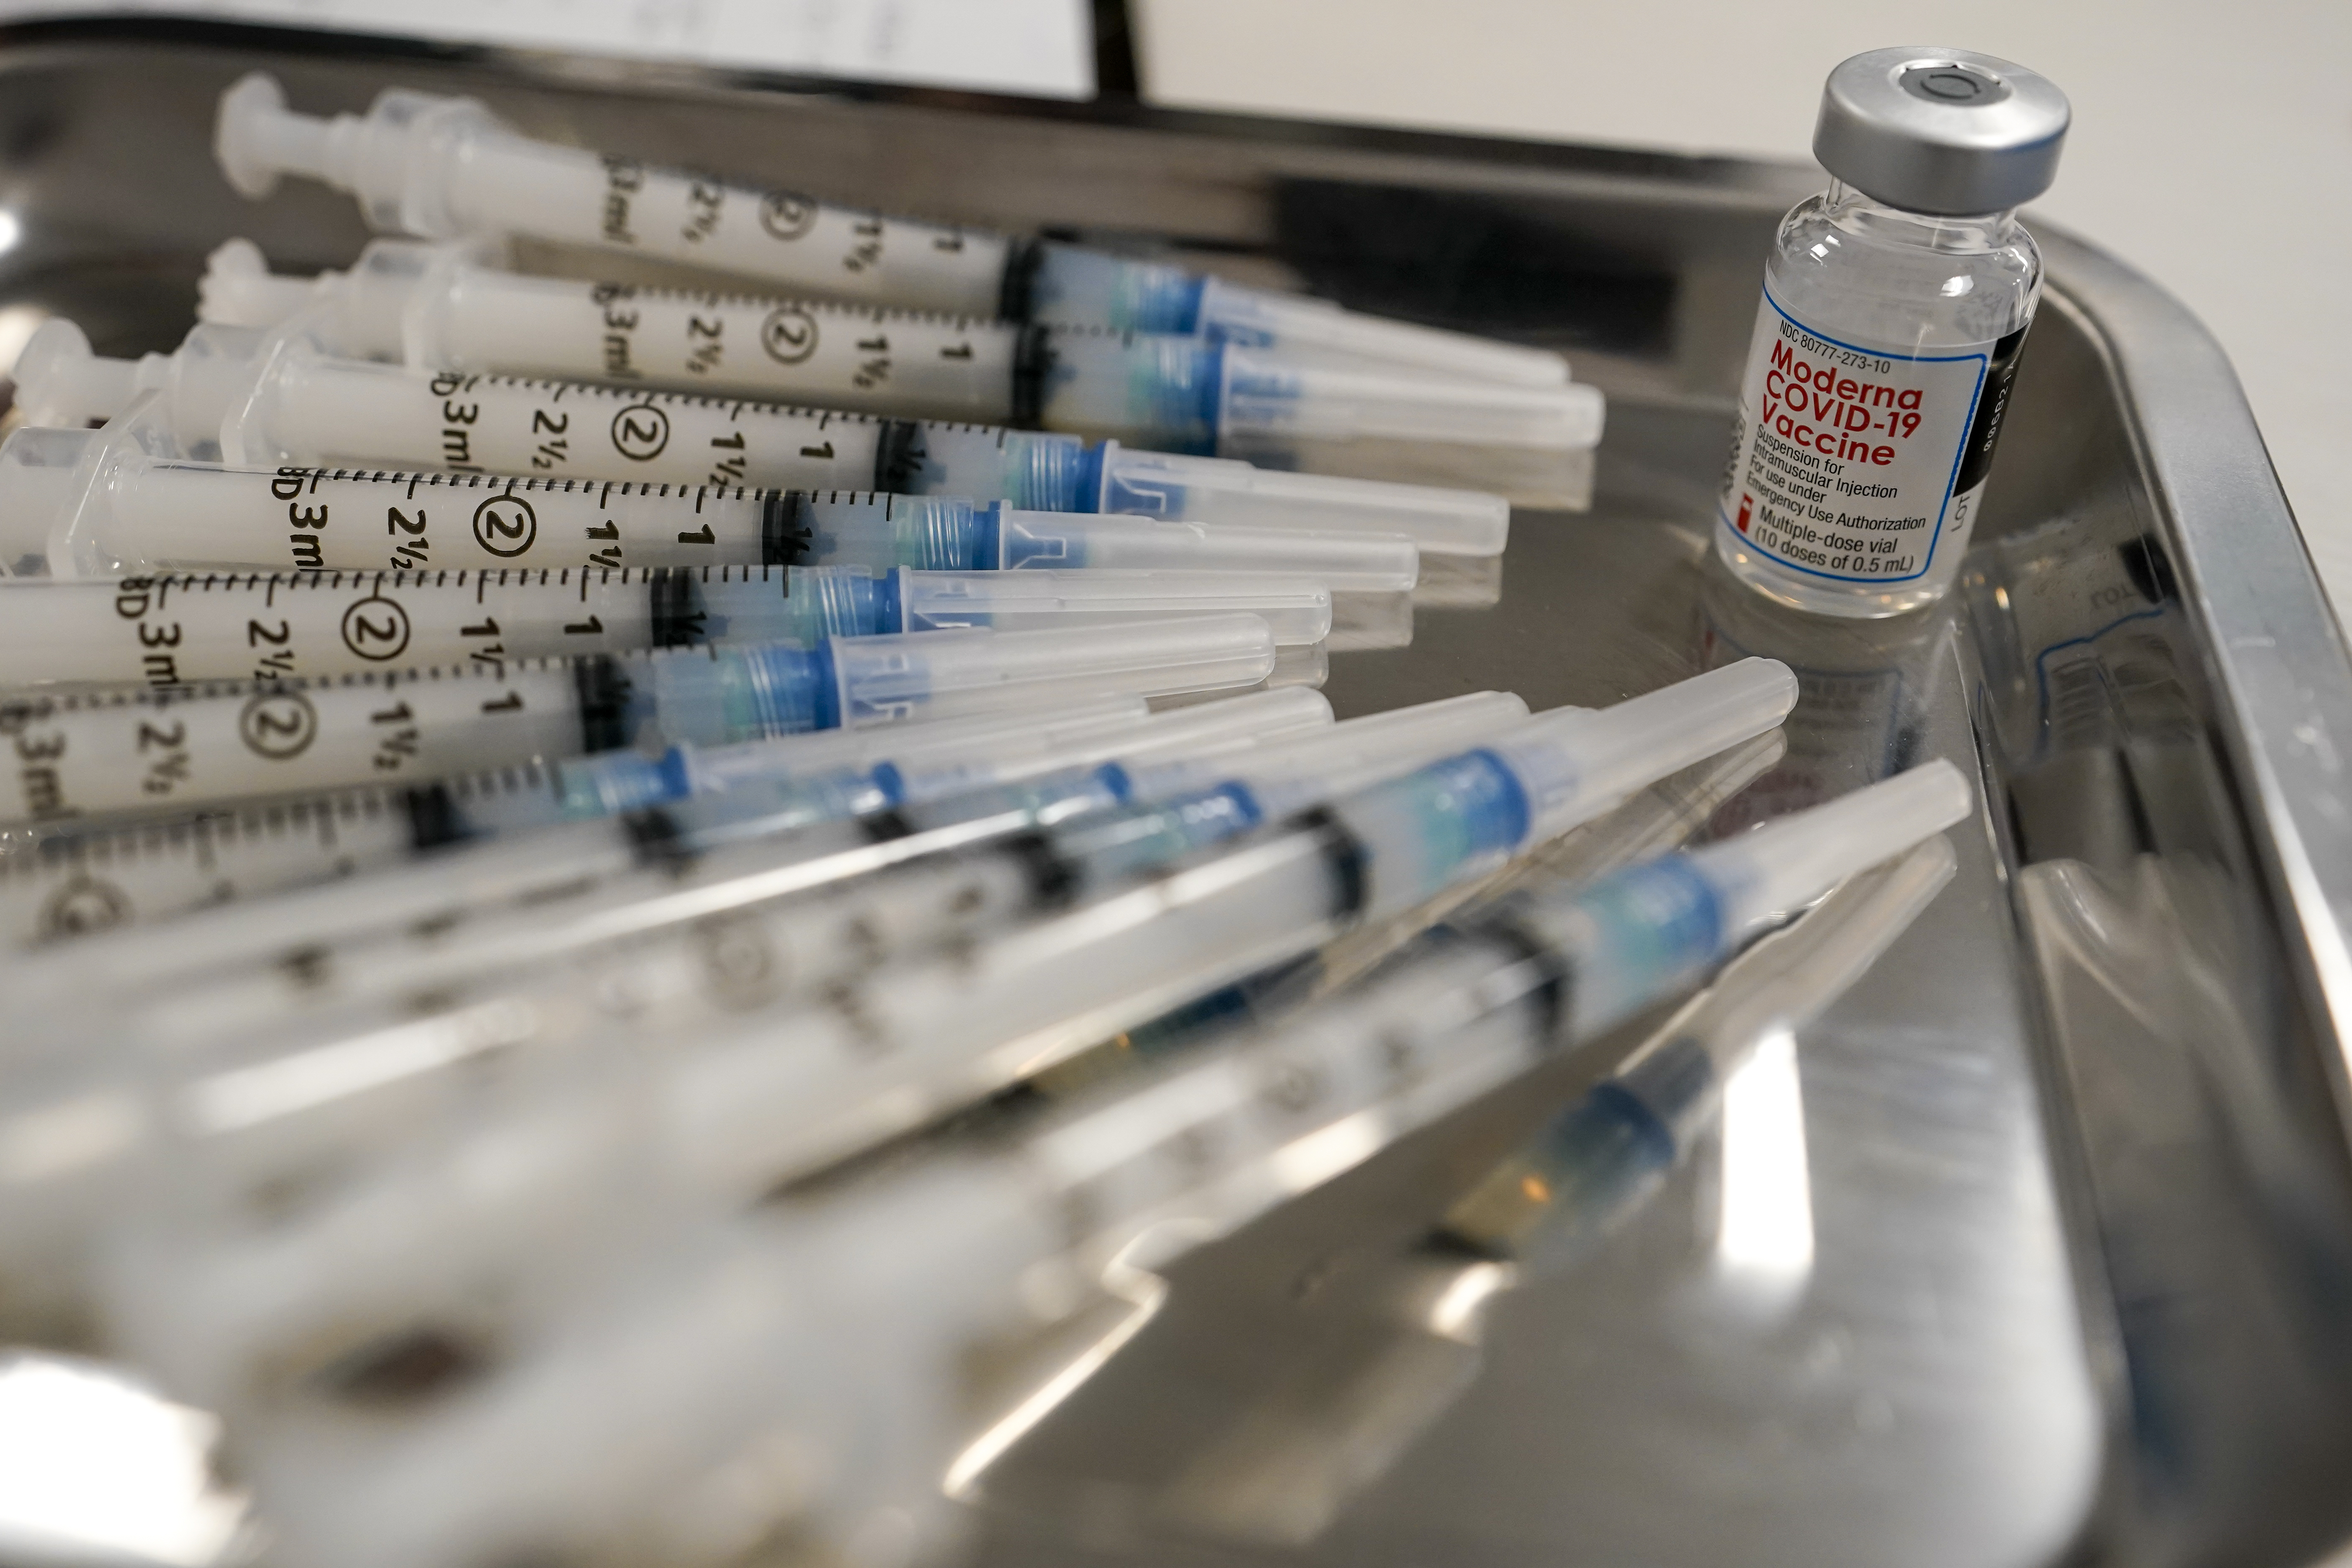 Massachusetts residents 16+ can get coronavirus vaccines starting April 19